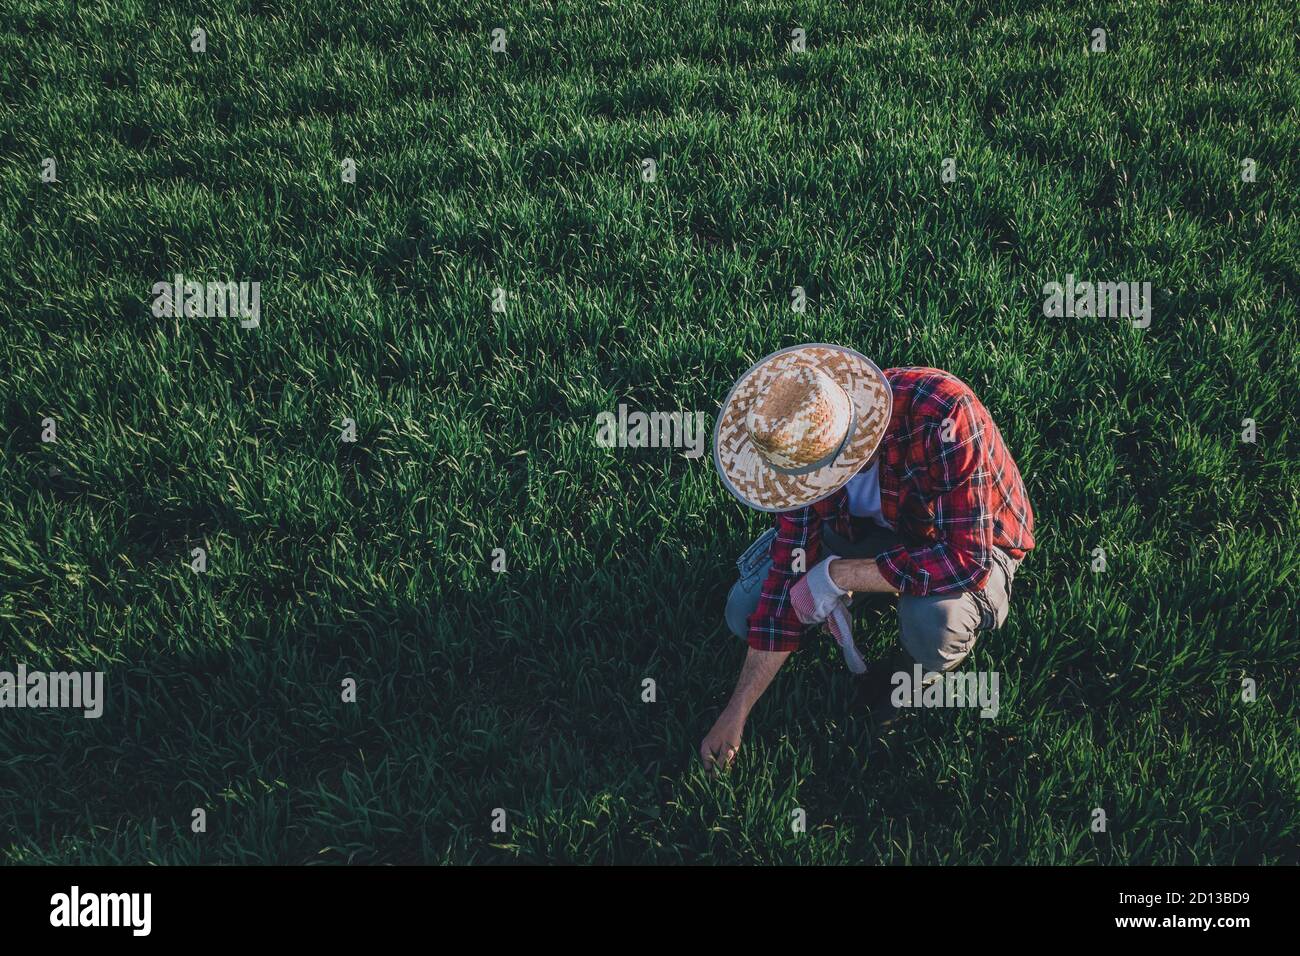 Wheat farmer analyzing crop development, adult male farm worker checking up on wheatgrass plantation Stock Photo